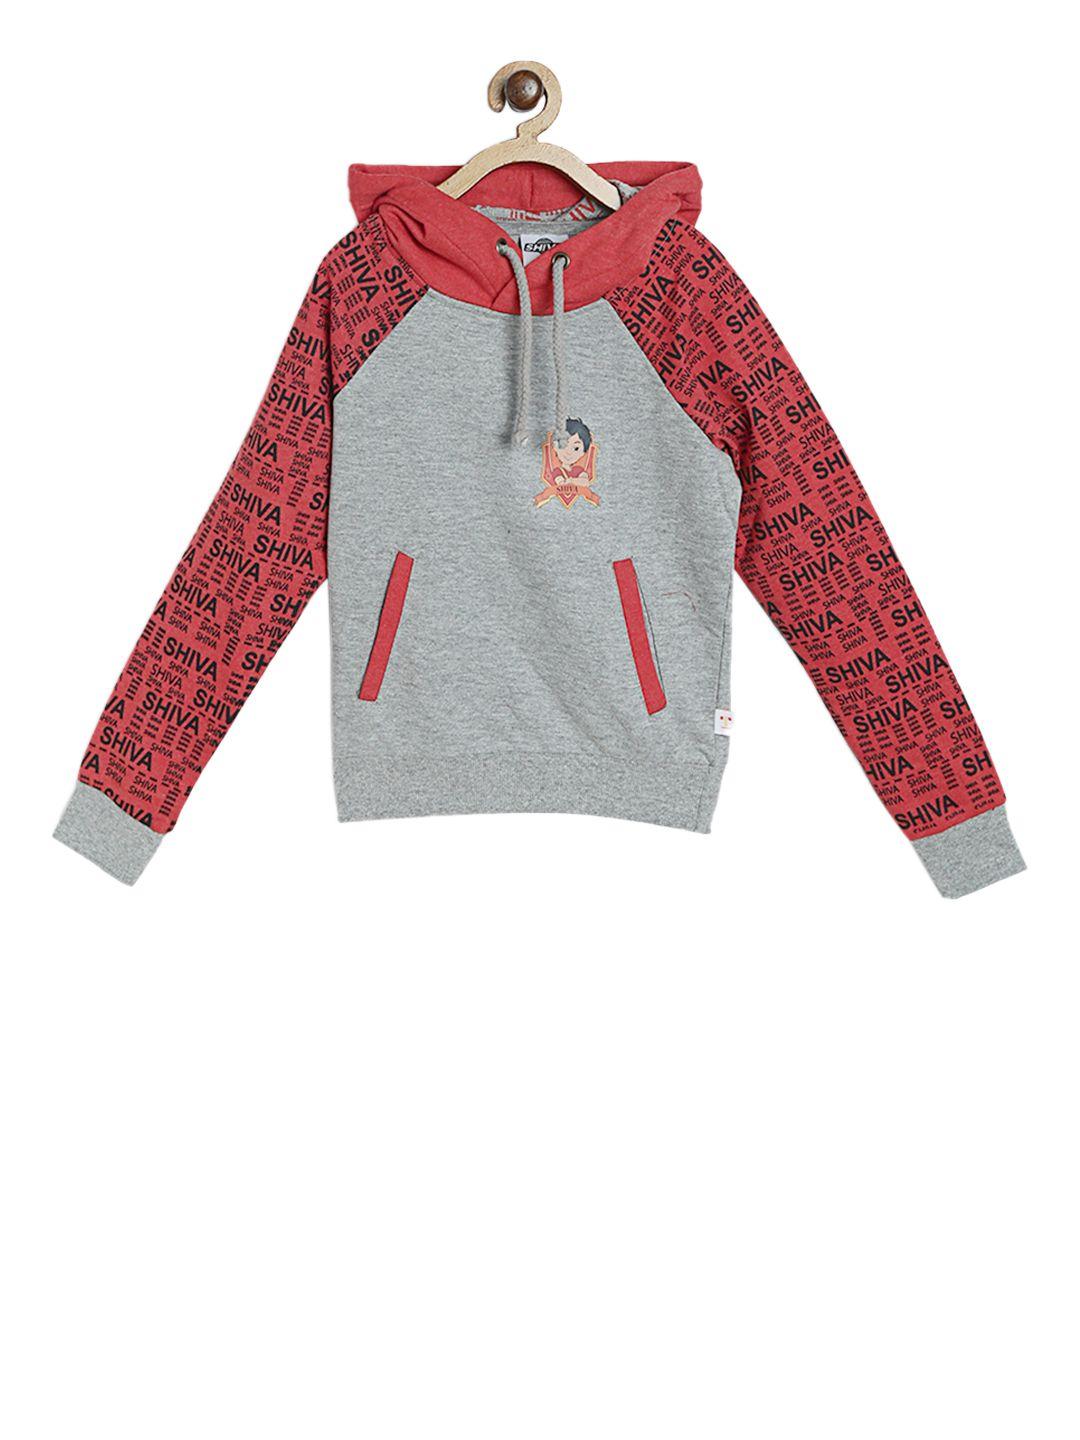 shiva boys grey & red printed hooded sweatshirt